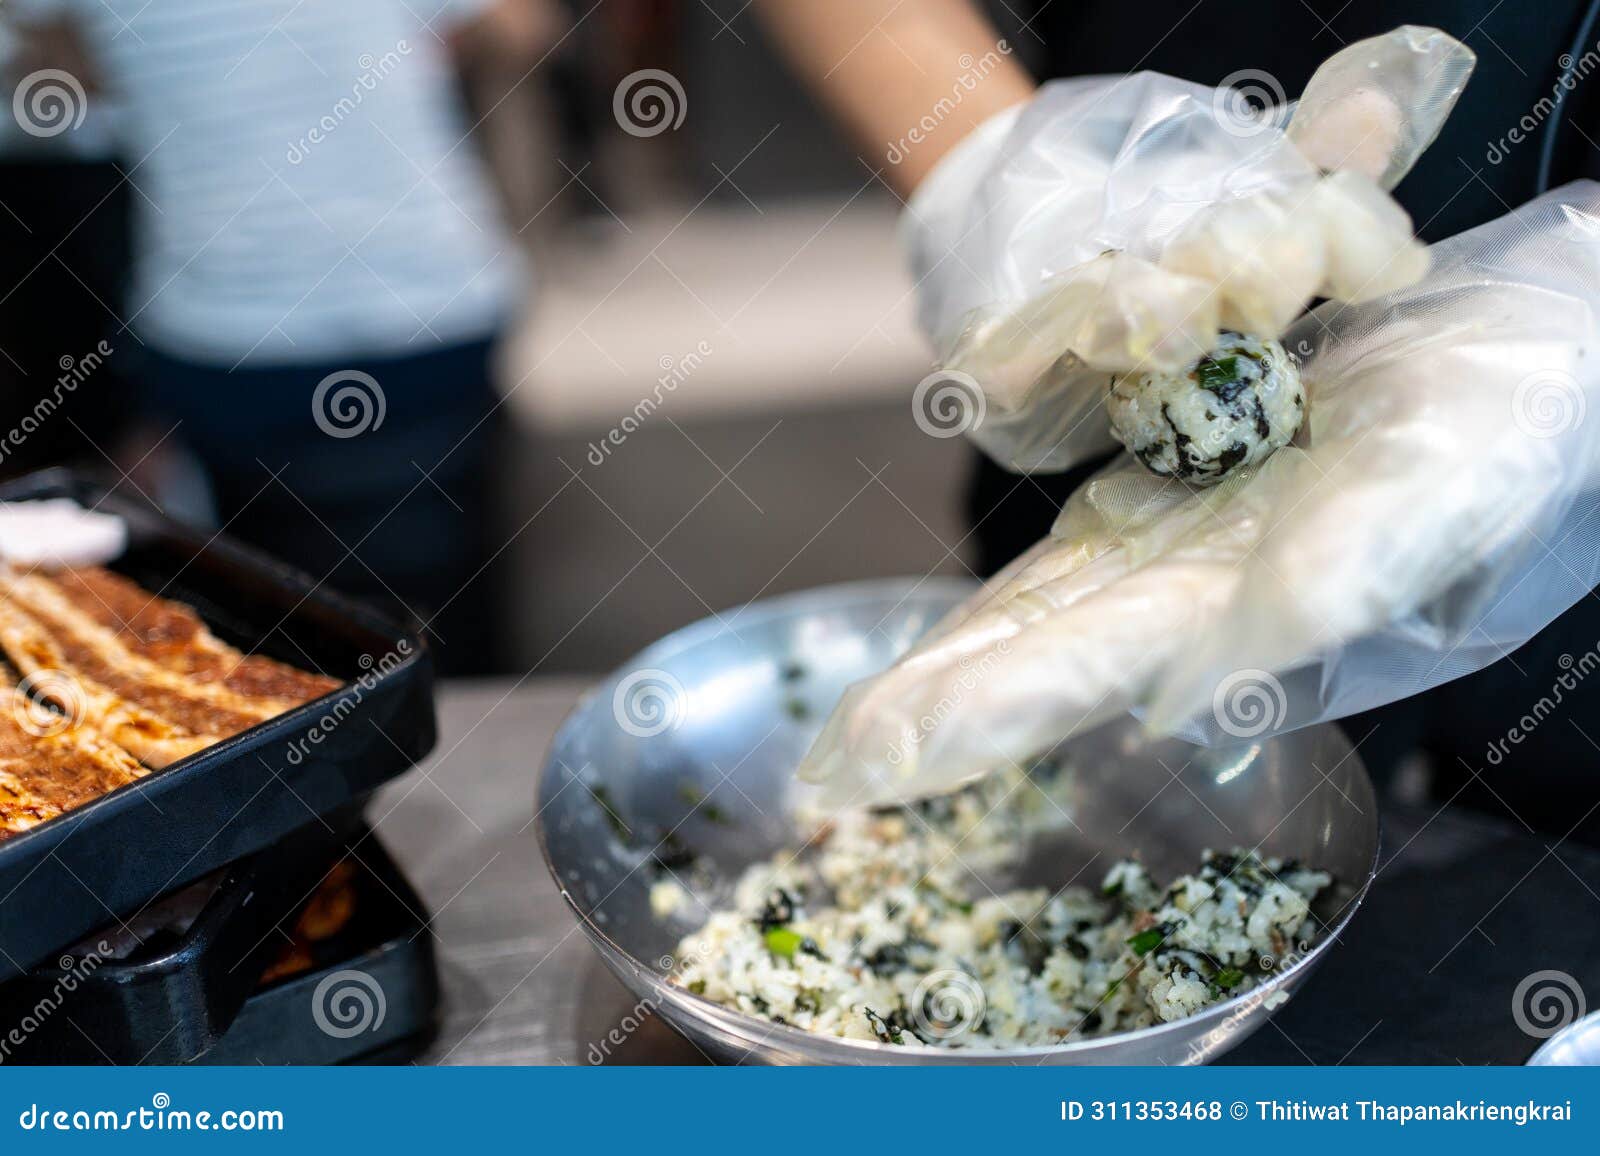 hands making korean seaweed rice ball called in korean is jumeogbab, jumeokbap, onigiri or chu mok bab is famous traditional